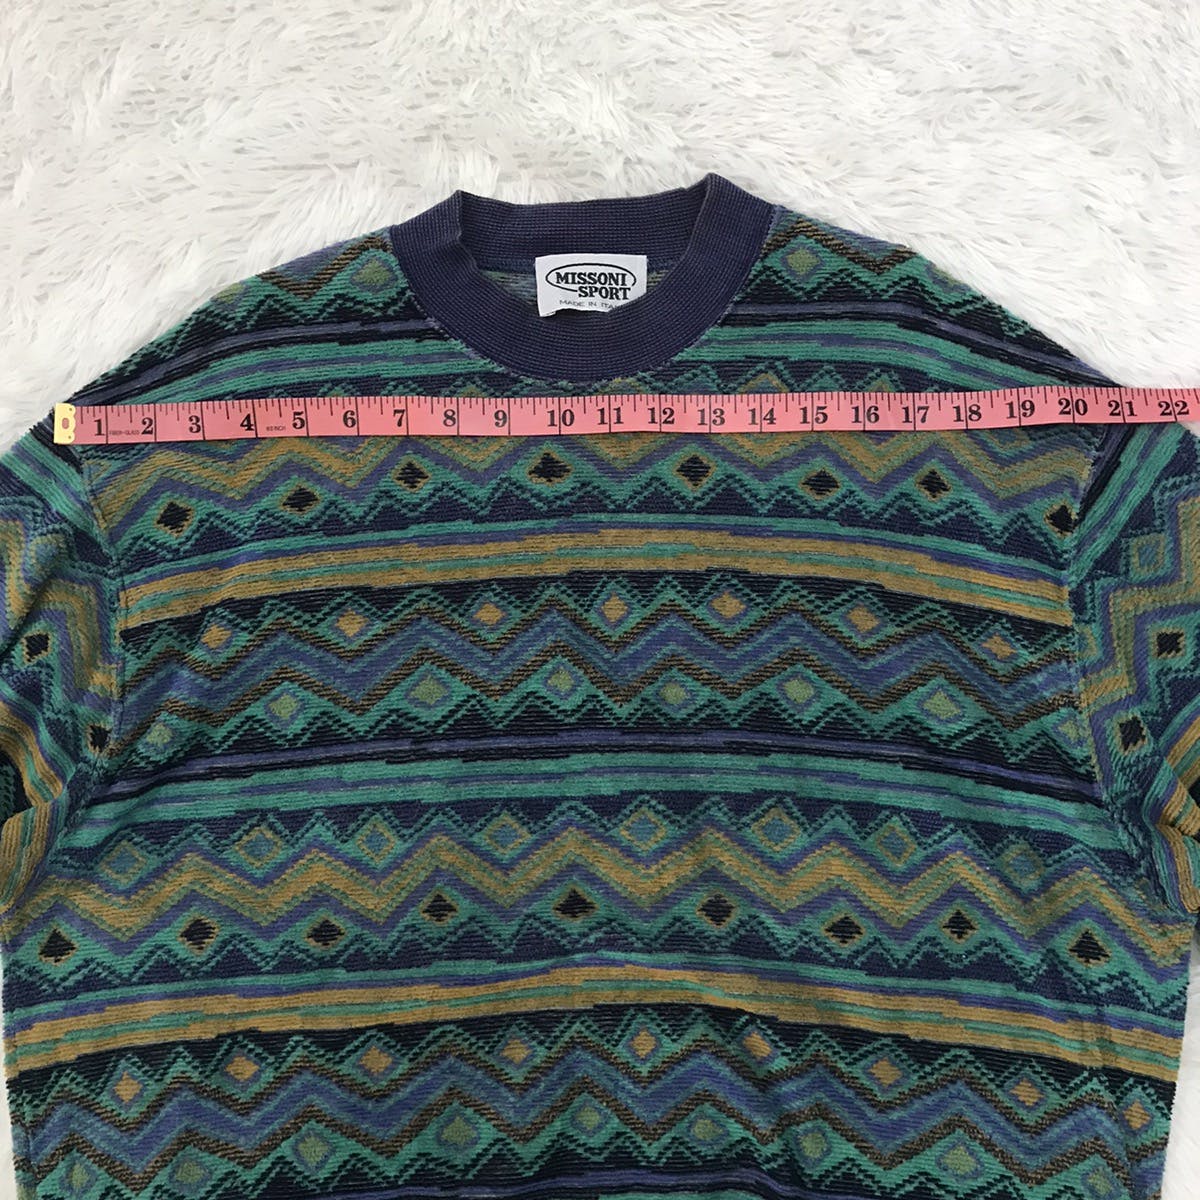 Missoni Sport Cozy Printed Sweater/Sweatshirt Jumper - 17